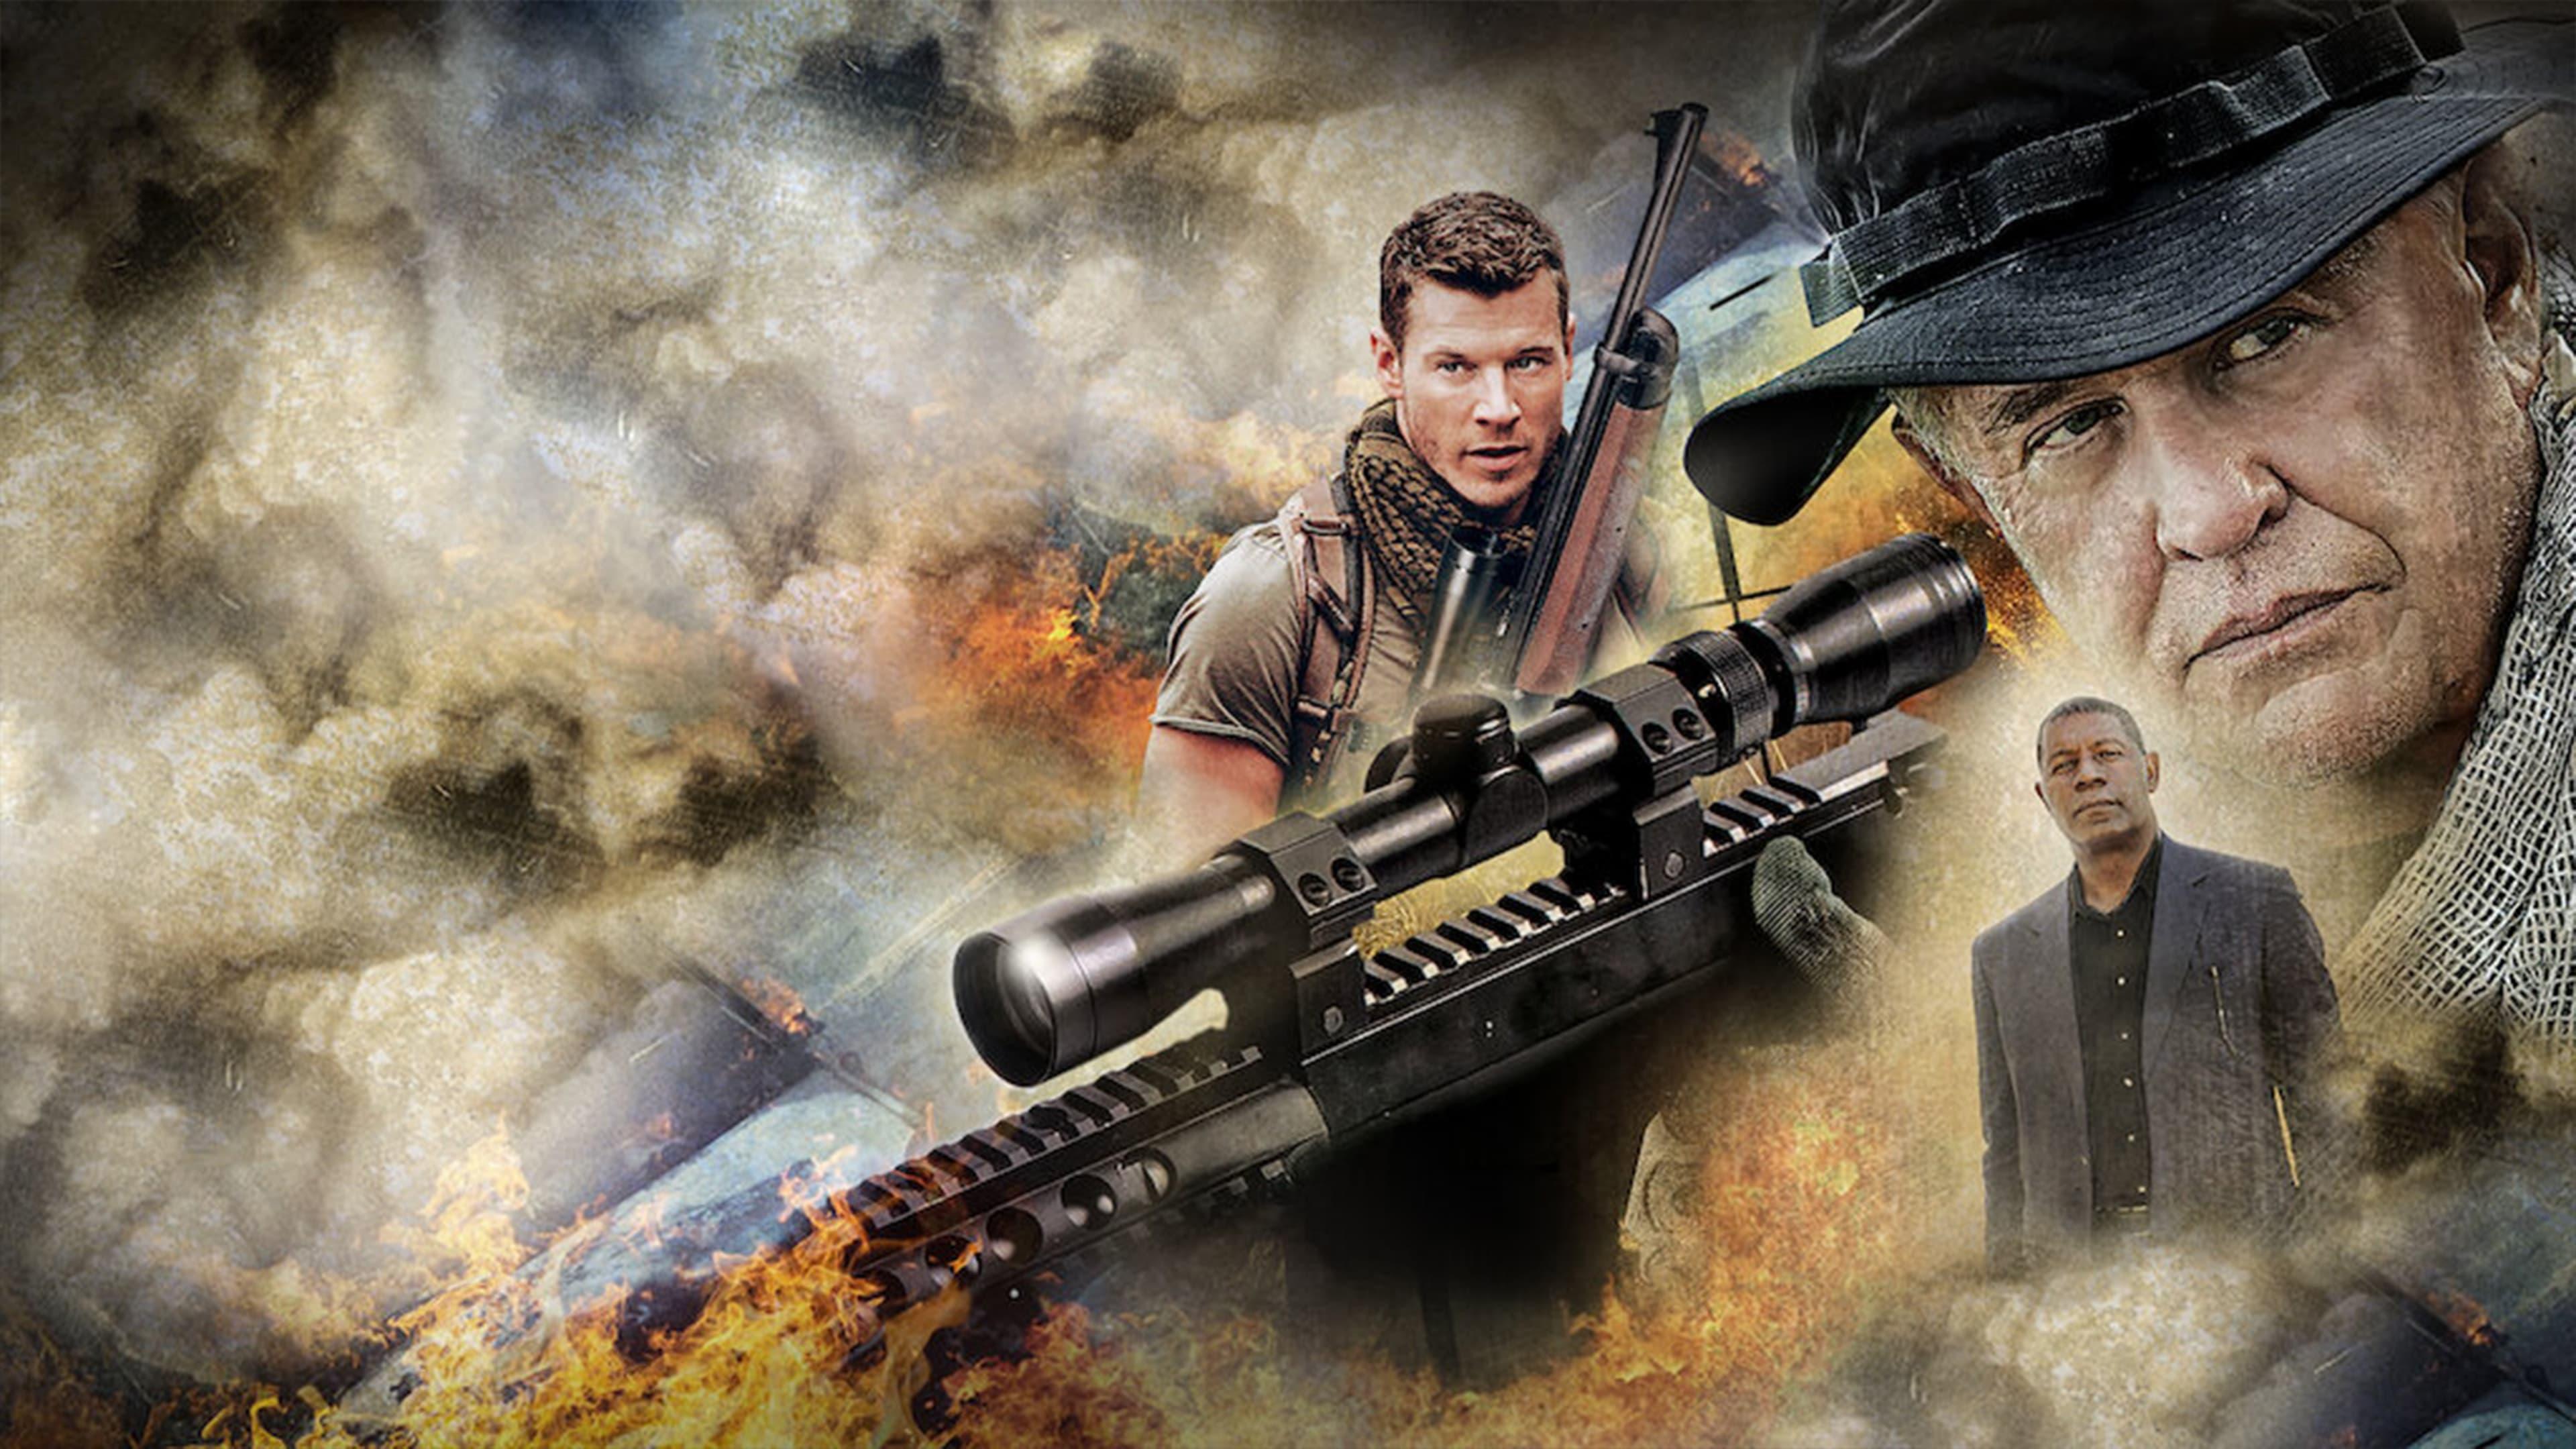 Sniper: Legacy backdrop